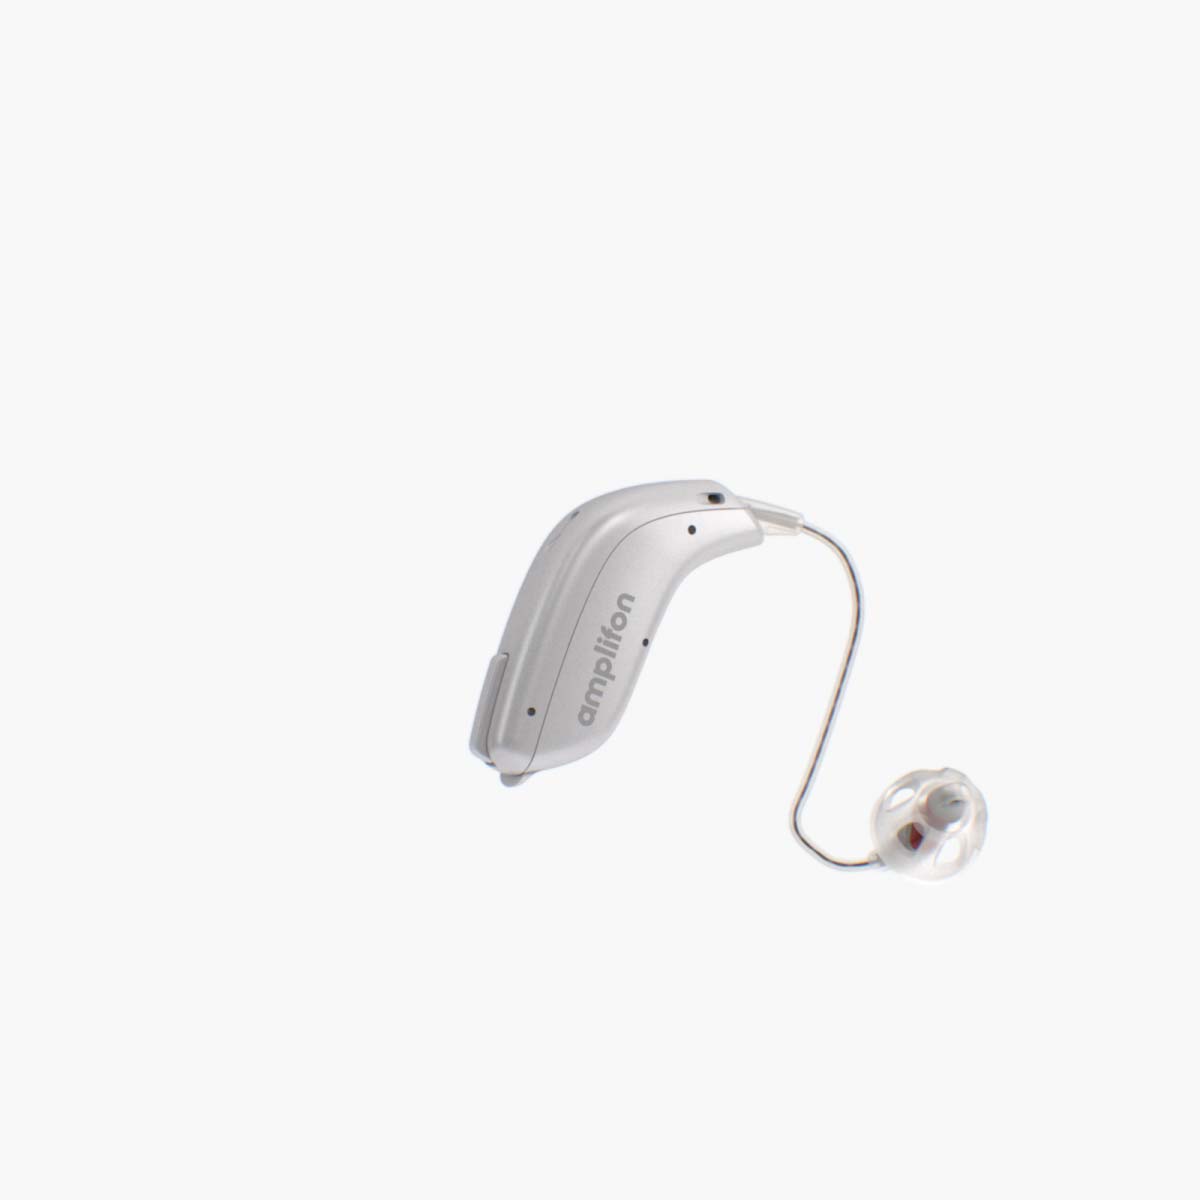 White Amplifon Hearing aid